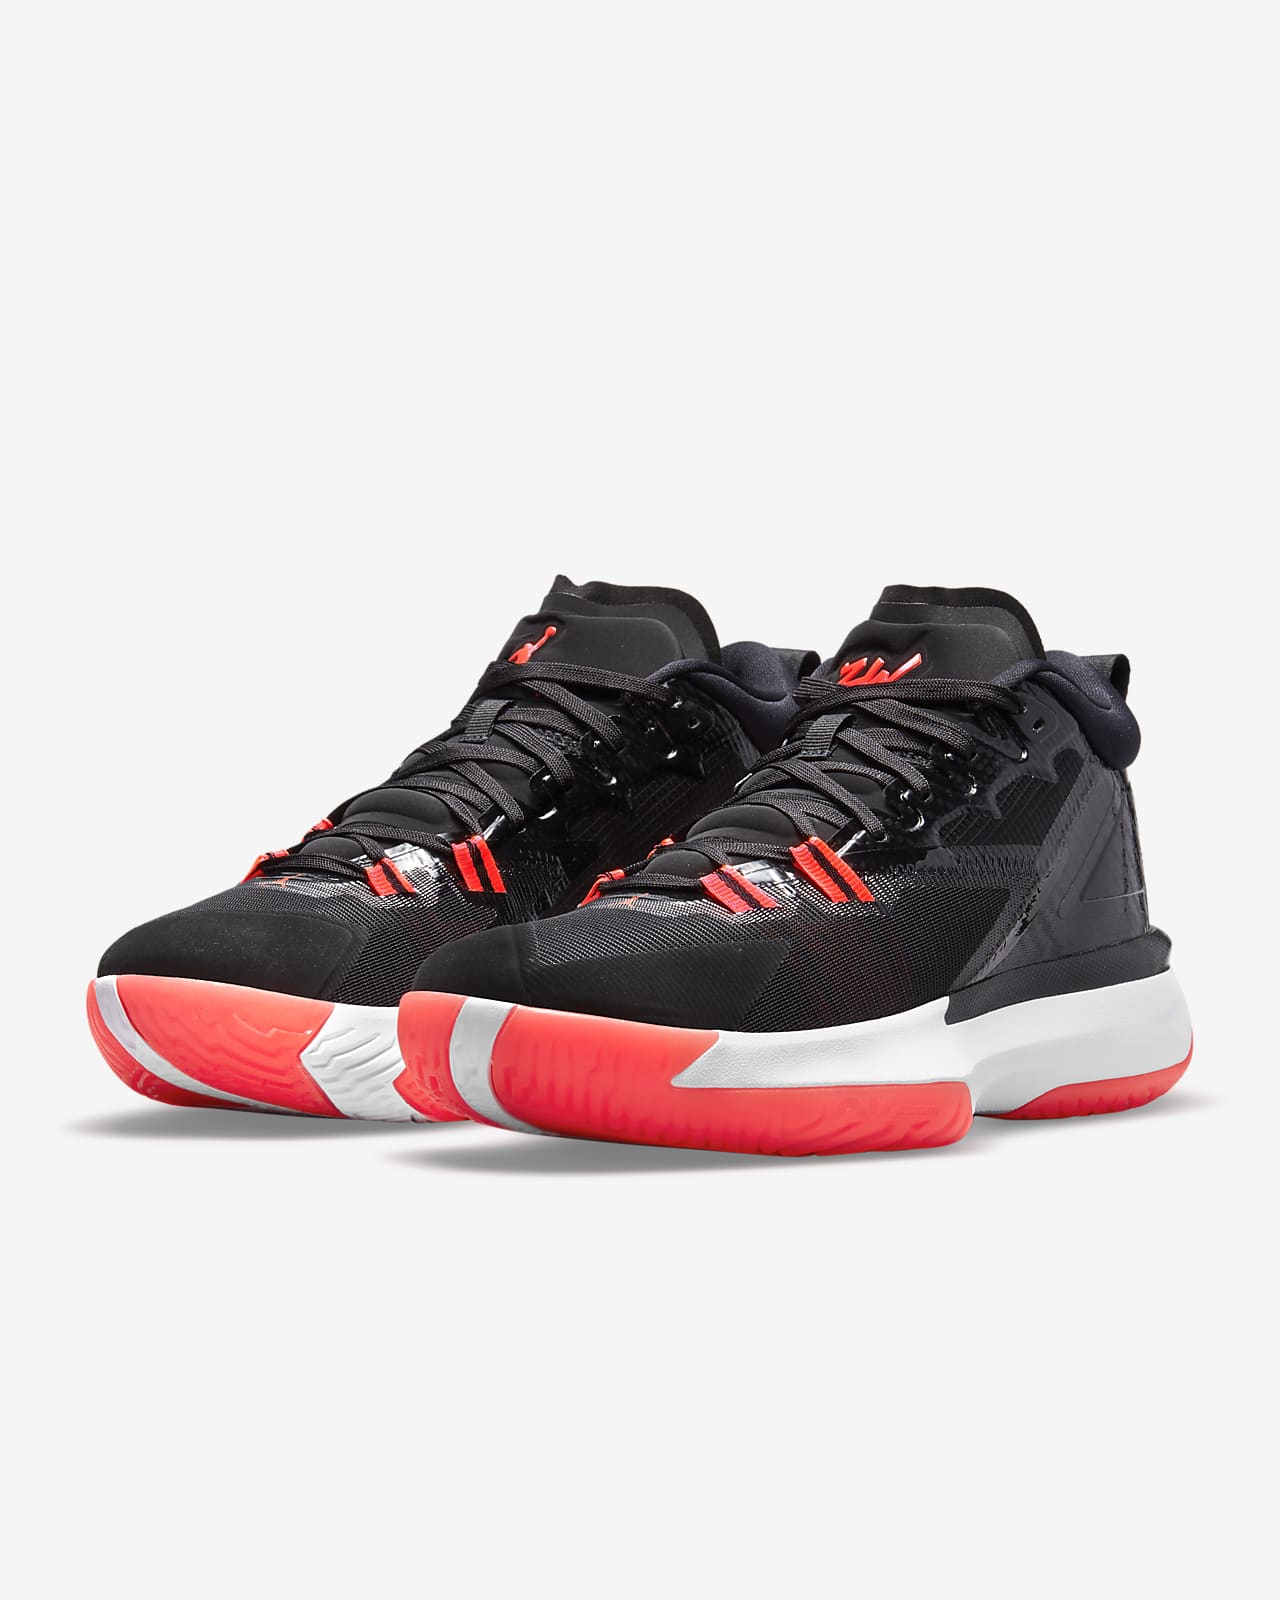 Zion 1 Basketball Shoes. Nike NZ